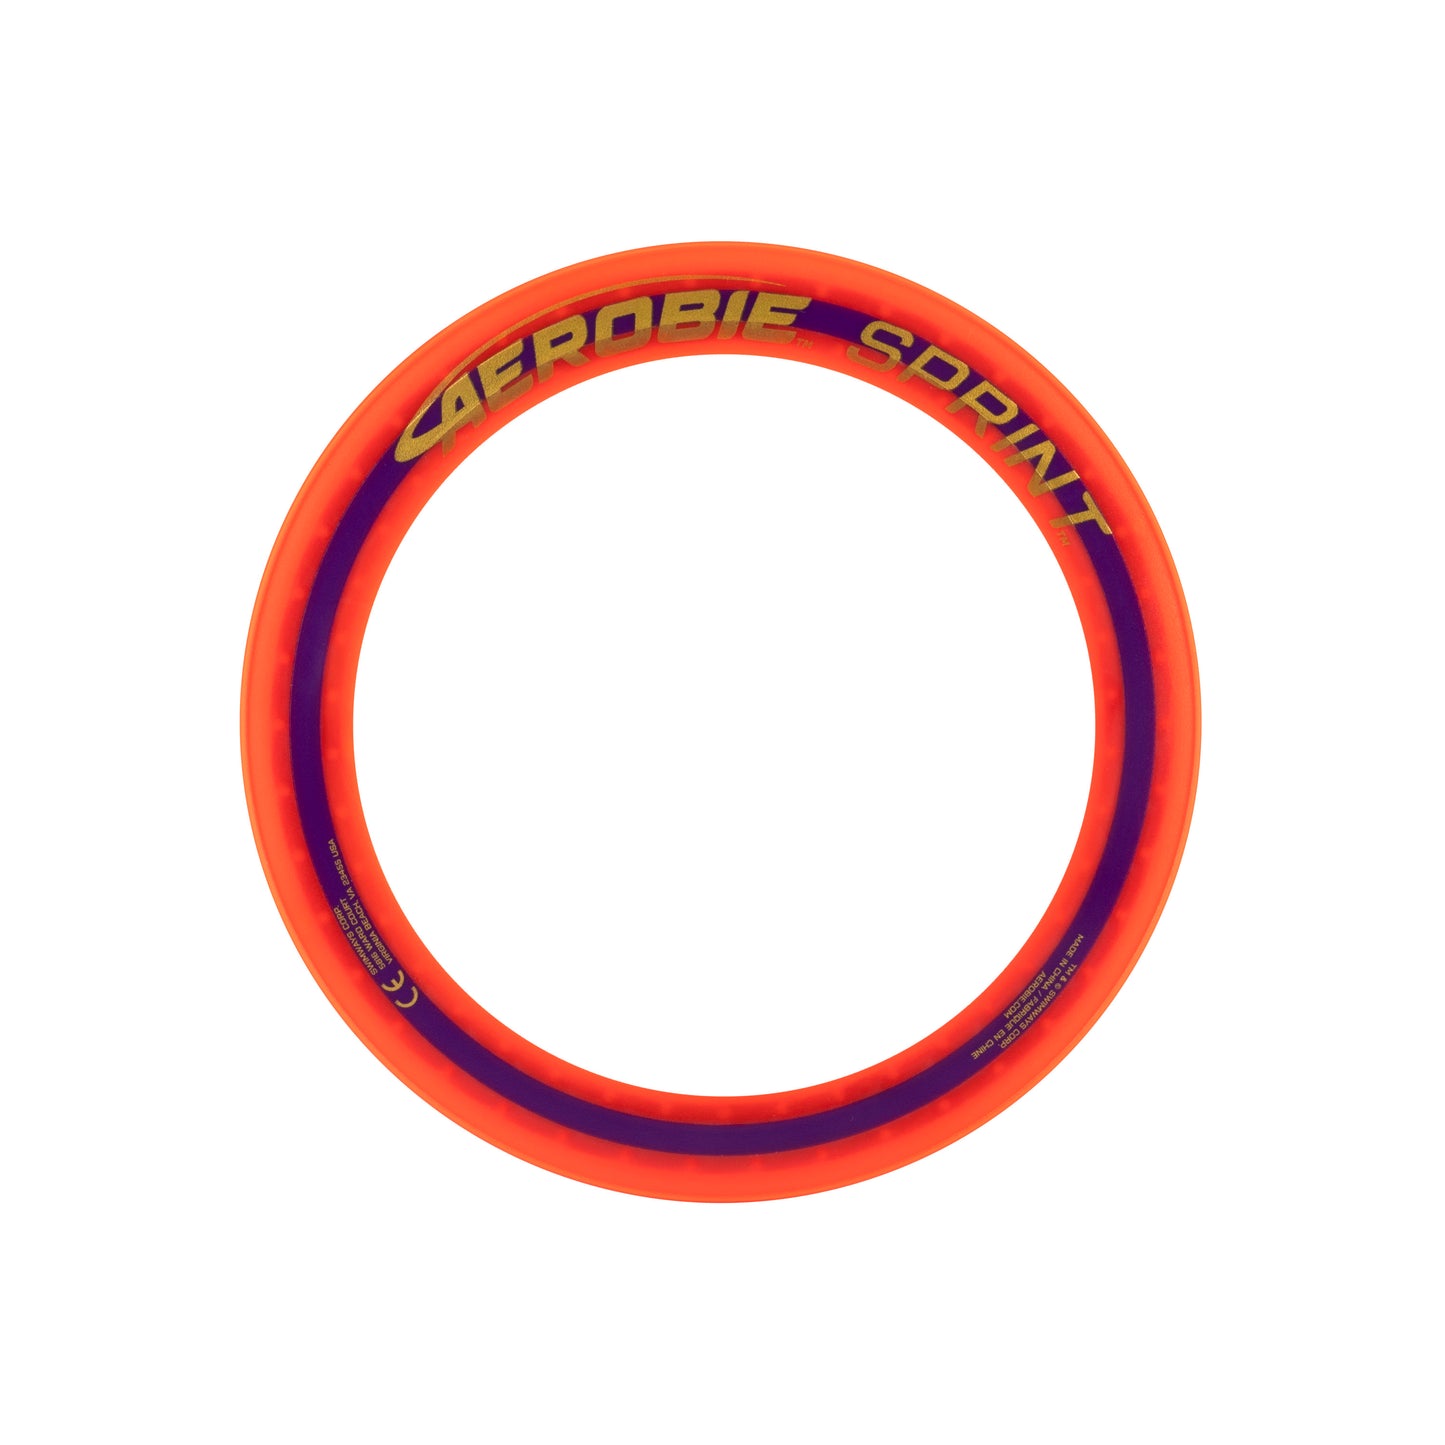 10" Aerobie Sprint ring